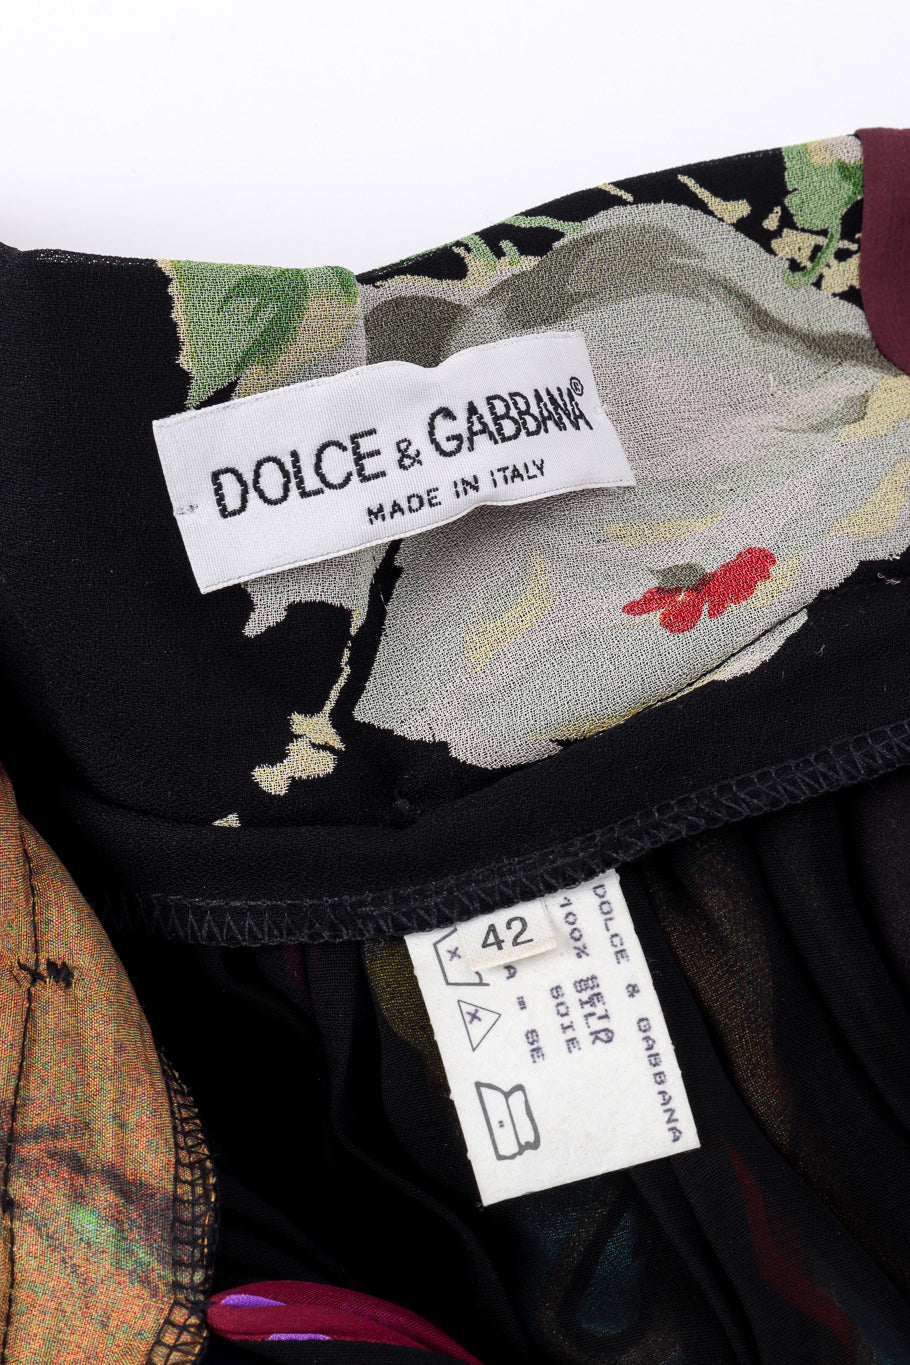 1993 S/S Silk Patchwork Bubble Skirt by Dolce & Gabbana label @recessla